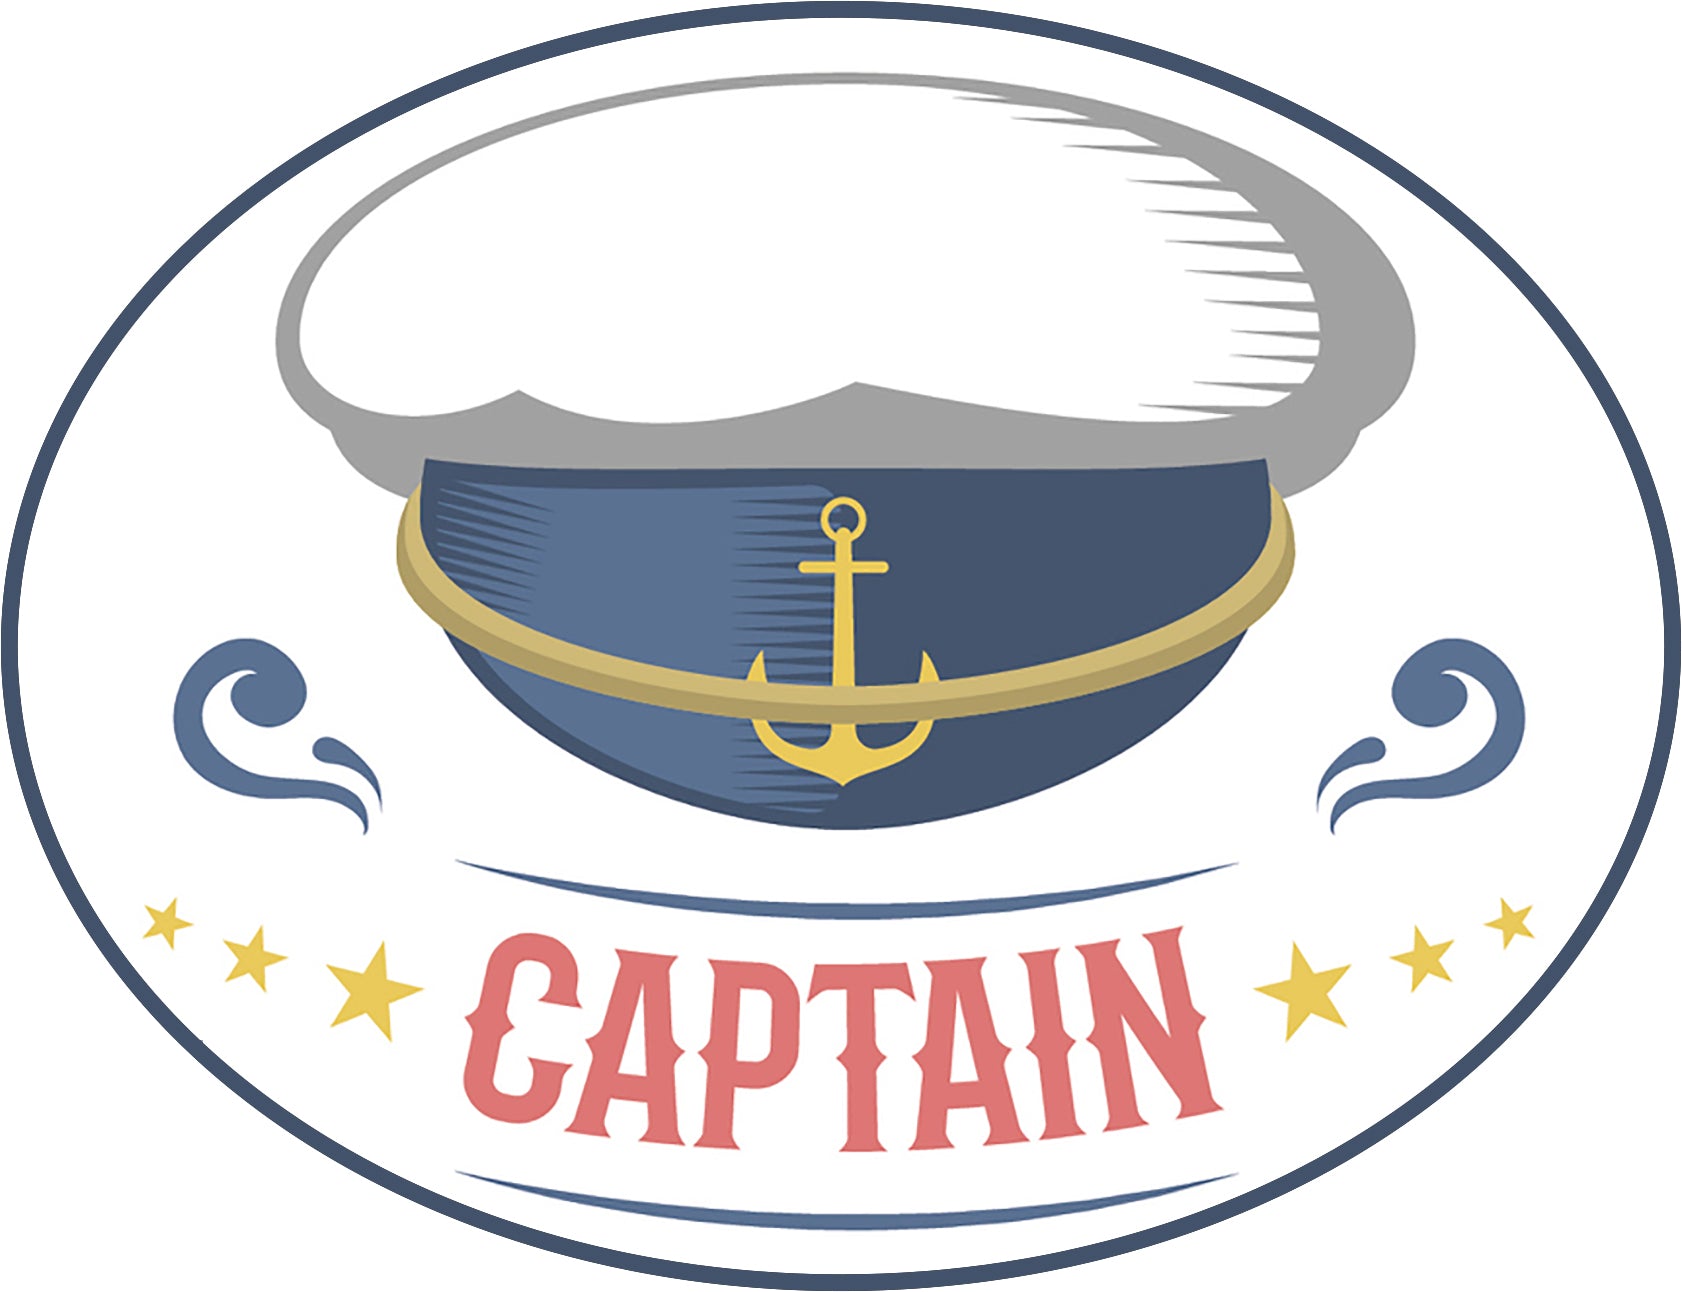 Cool Vintage Nautical Maritime Cartoon Art Logo Icon - Captain's Hat Border Around Image As Shown Vinyl Decal Sticker